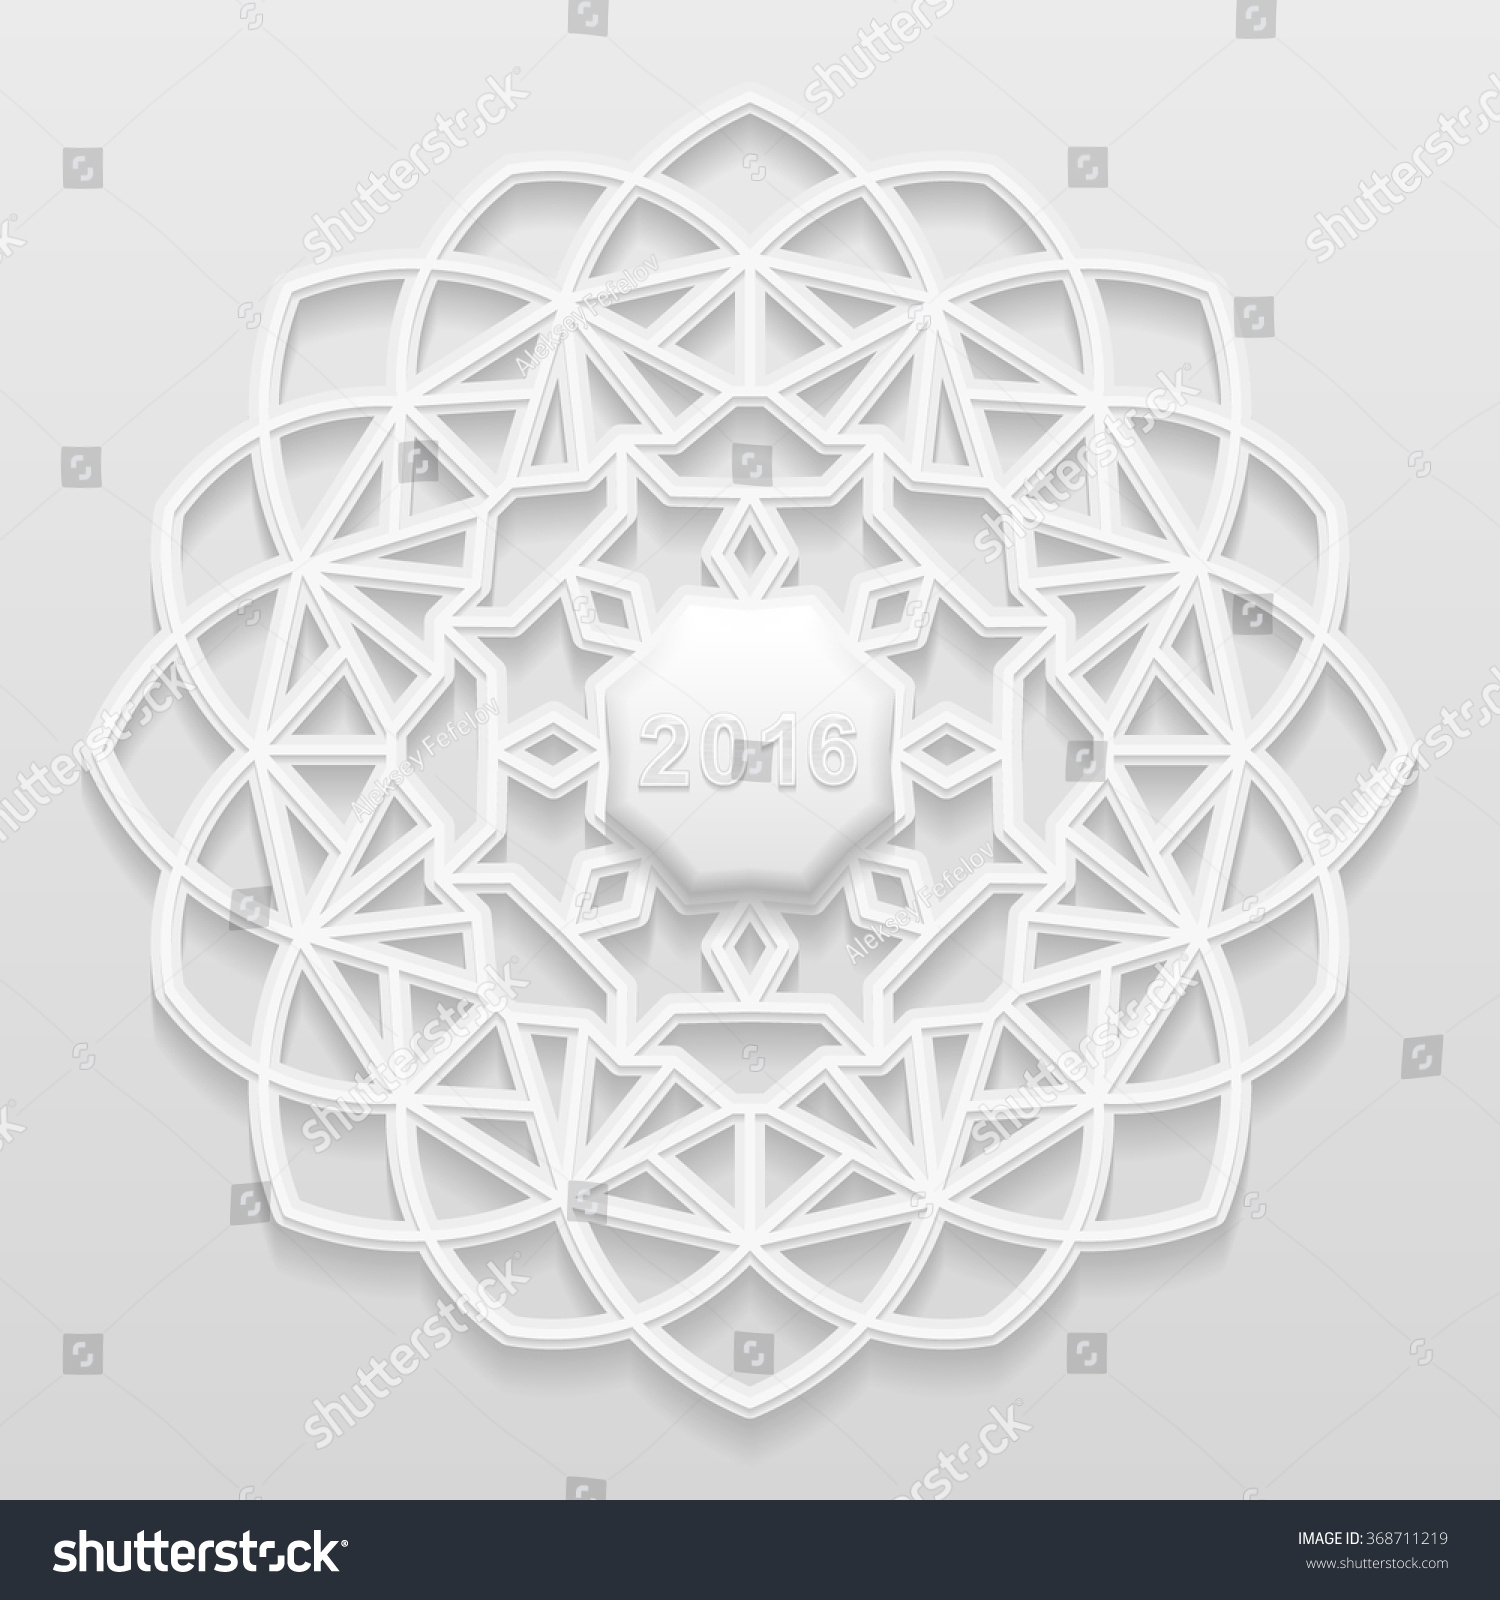 Download Decorative Flower Decorative Snowflake Mandala Embossed Stock Vector 368711219 - Shutterstock